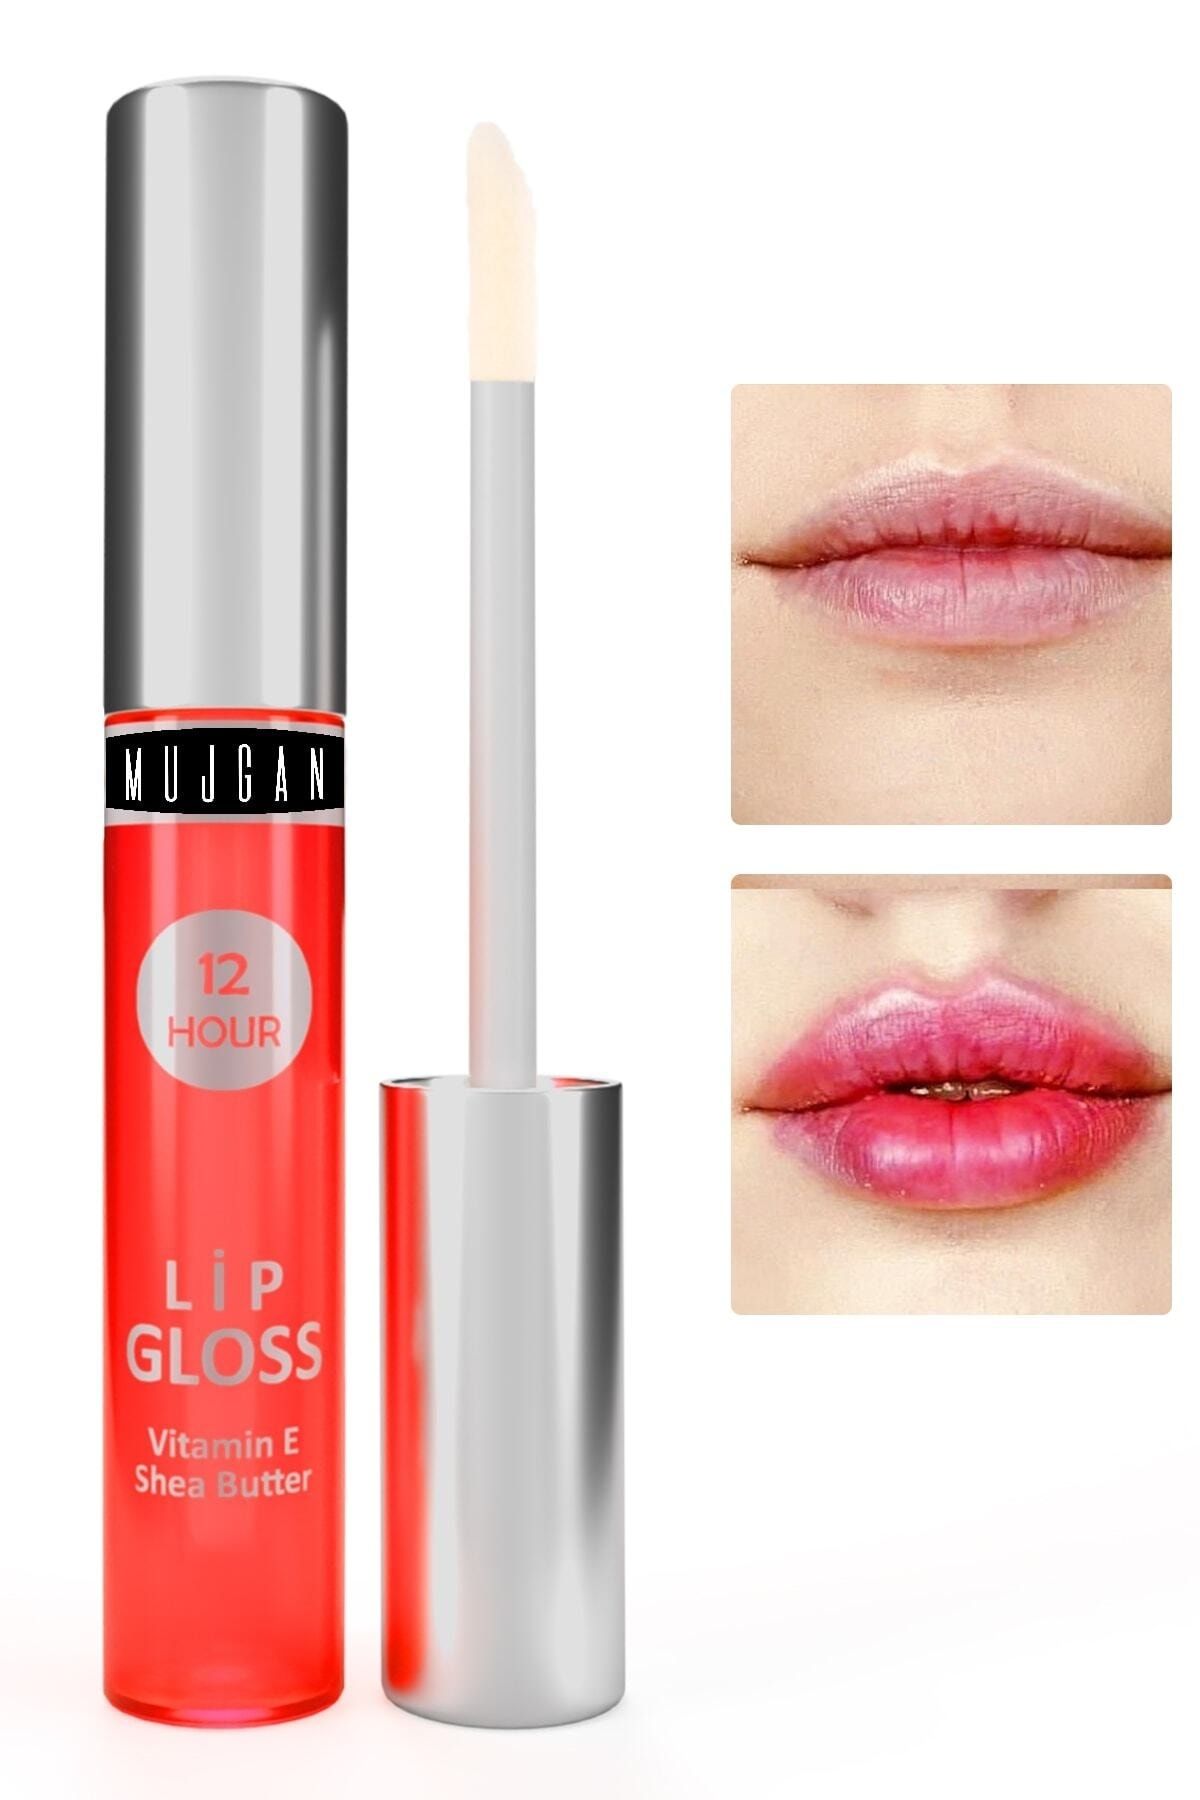 MUJGAN Dudak Bakım Nemlendiricisi Lip Gloss Vitamin E Pembe Ambalaj 4 ml